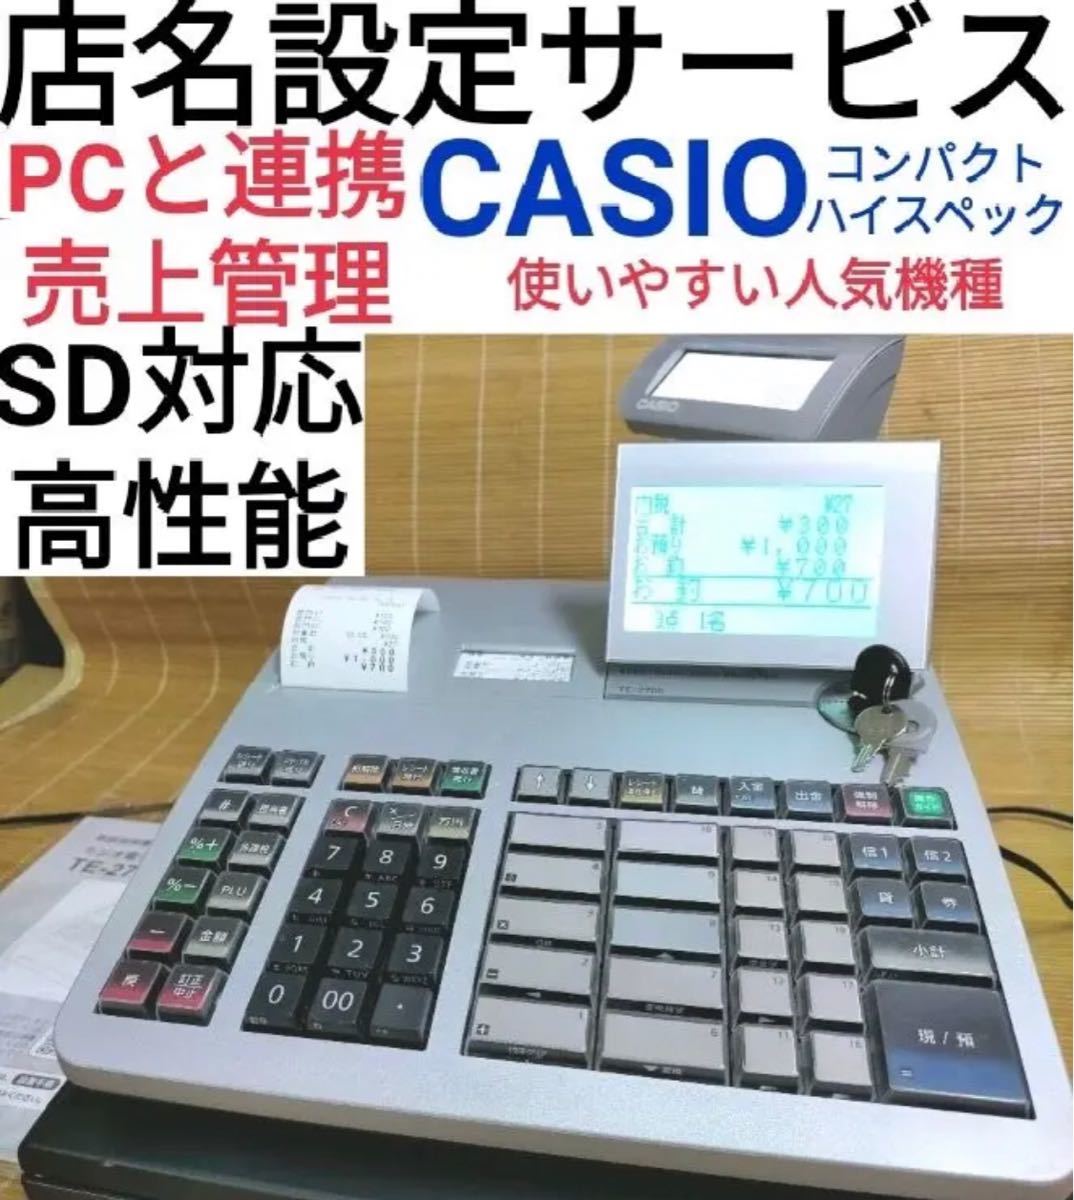 CASIO レジスター TE-2700 高性能 PC連携売上管理 n6124 - 店舗用品